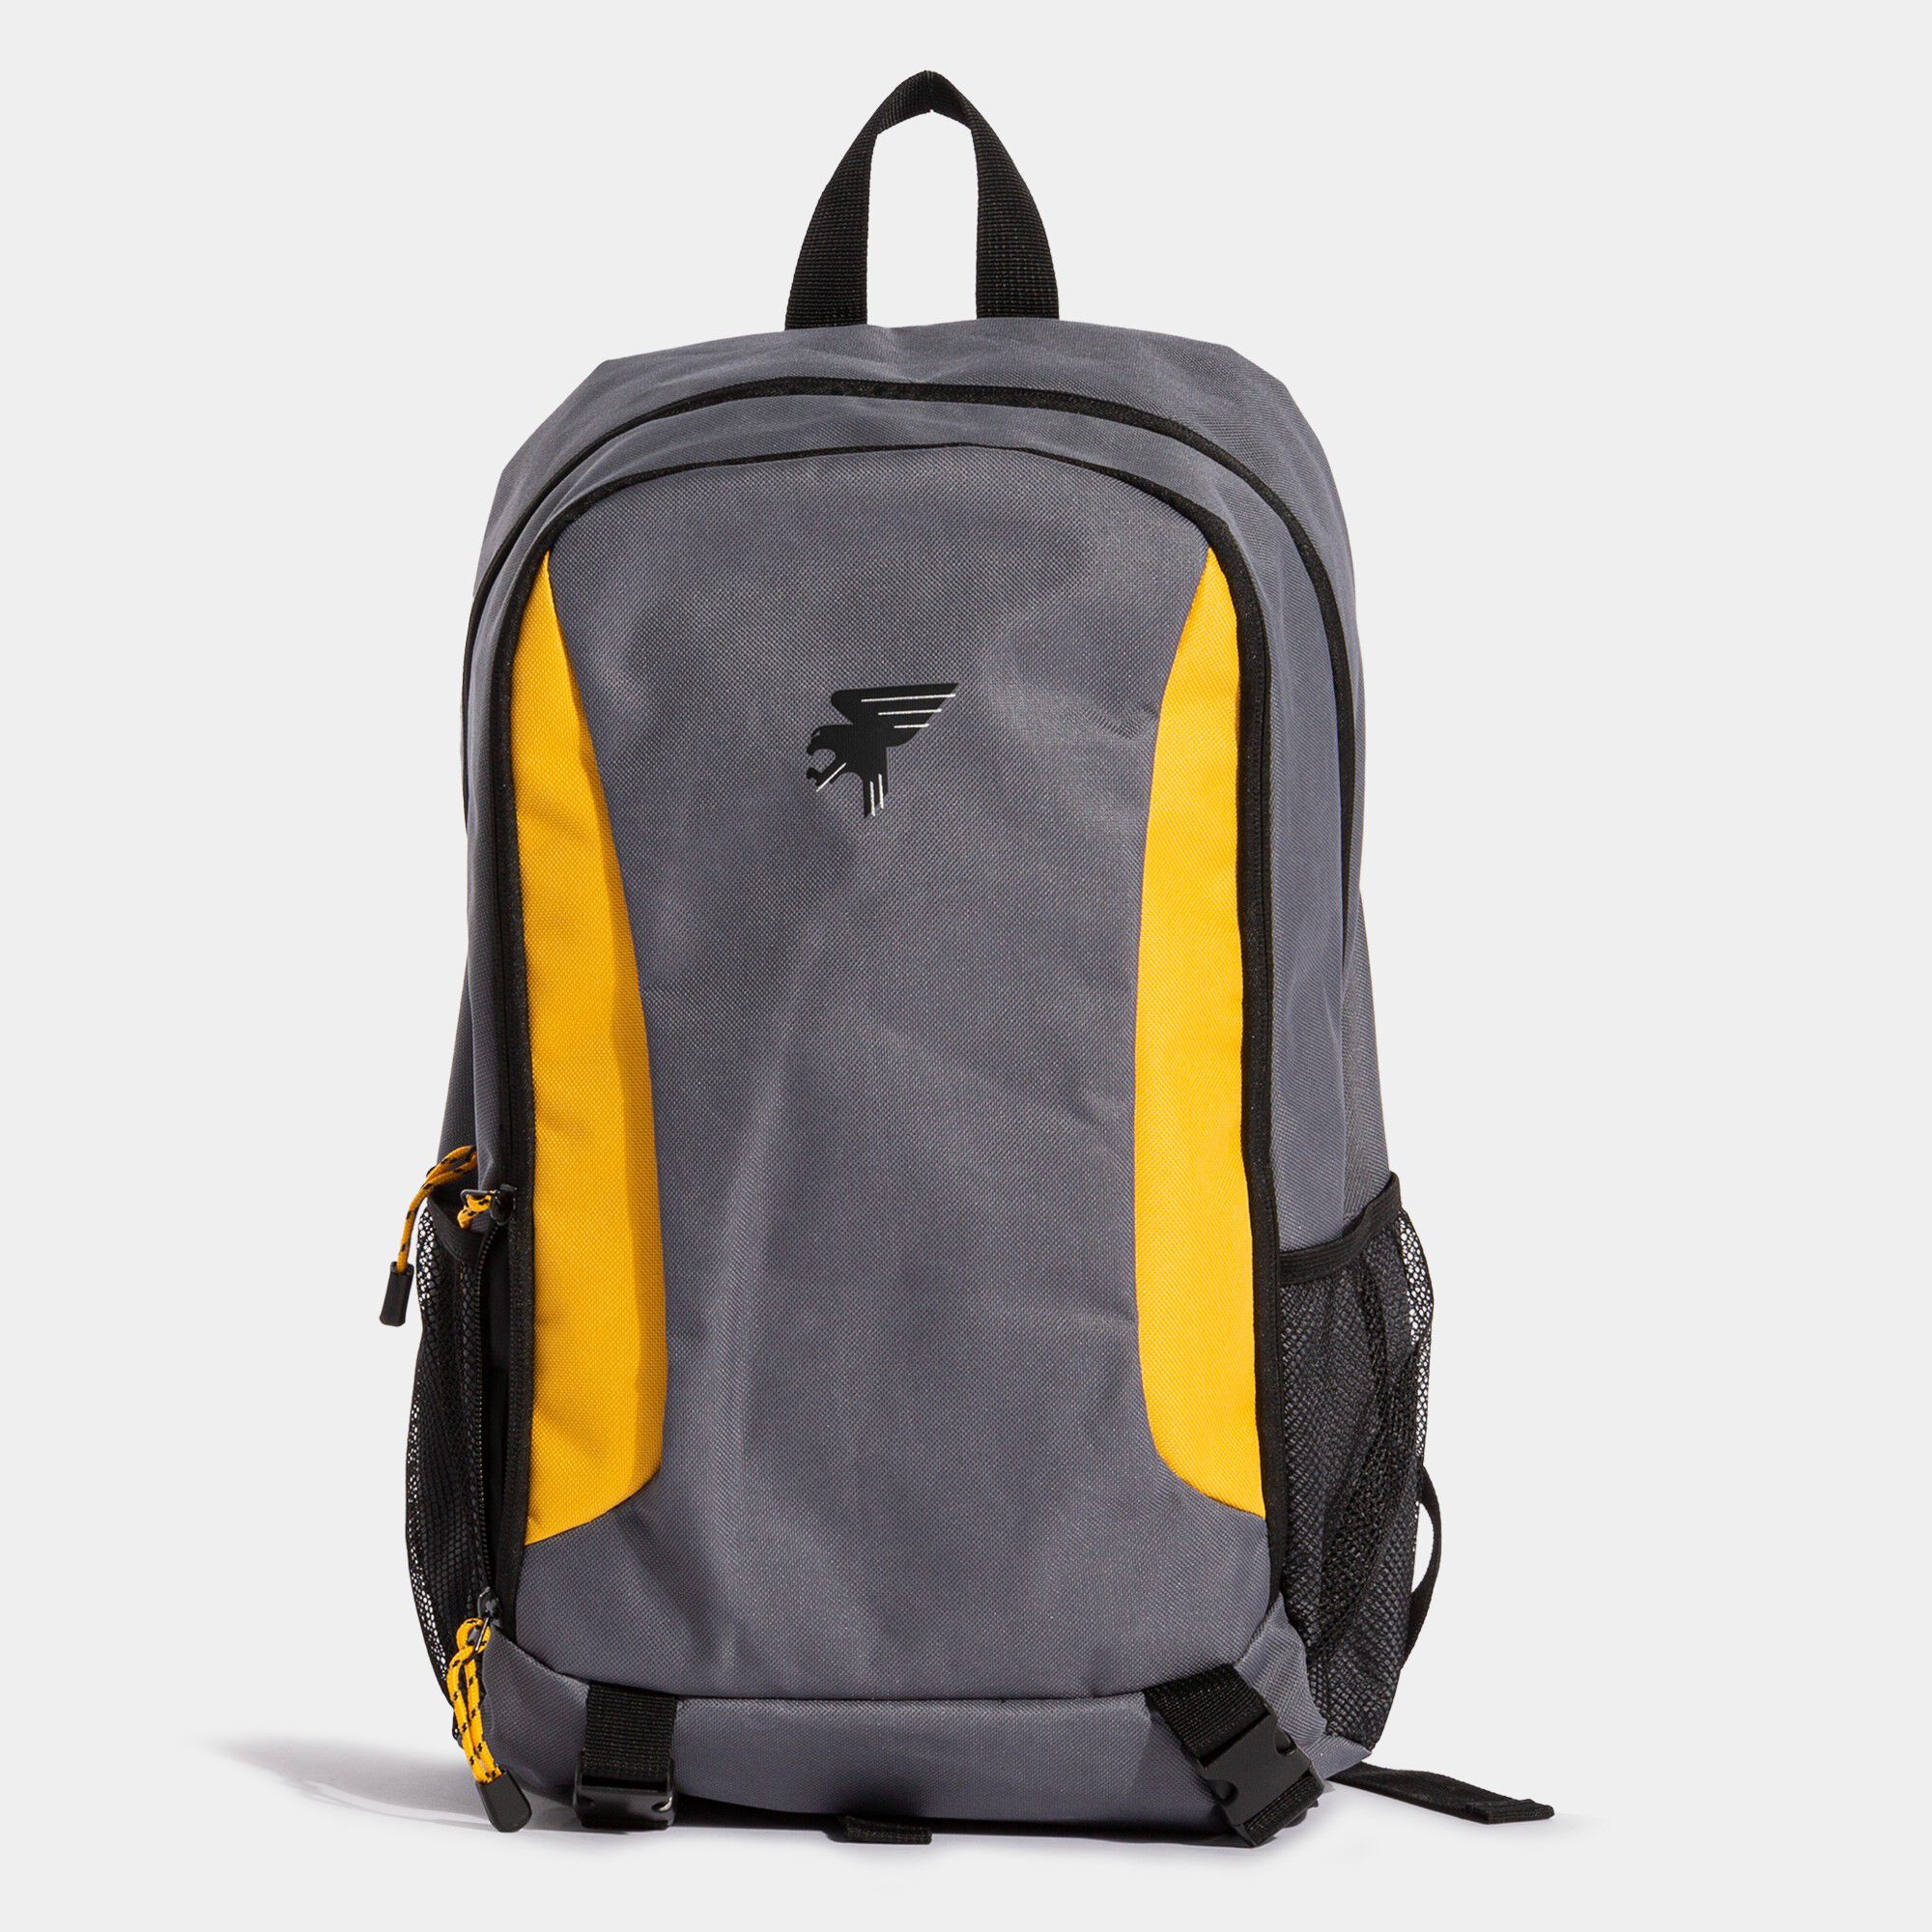 Backpack - shoe bag Explorer dark gray yellow